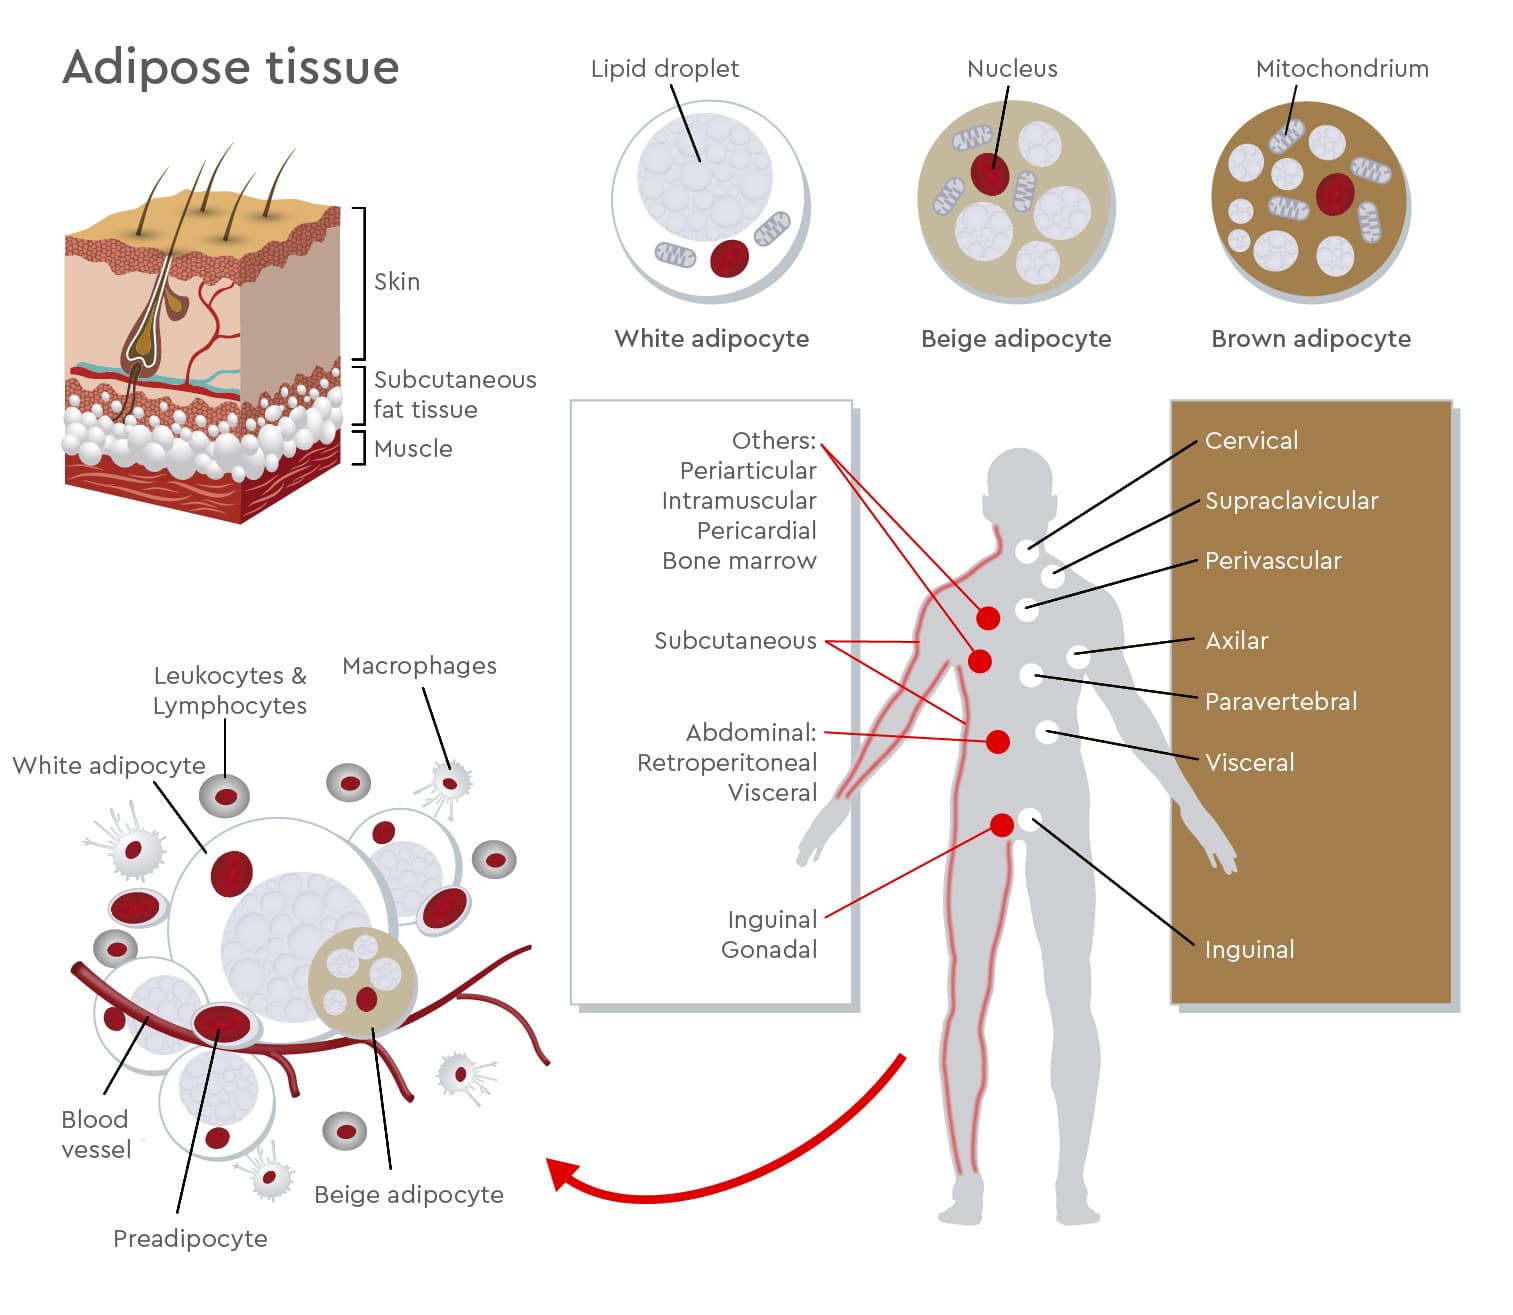 Adipocytes: key players in metabolic homeostasis